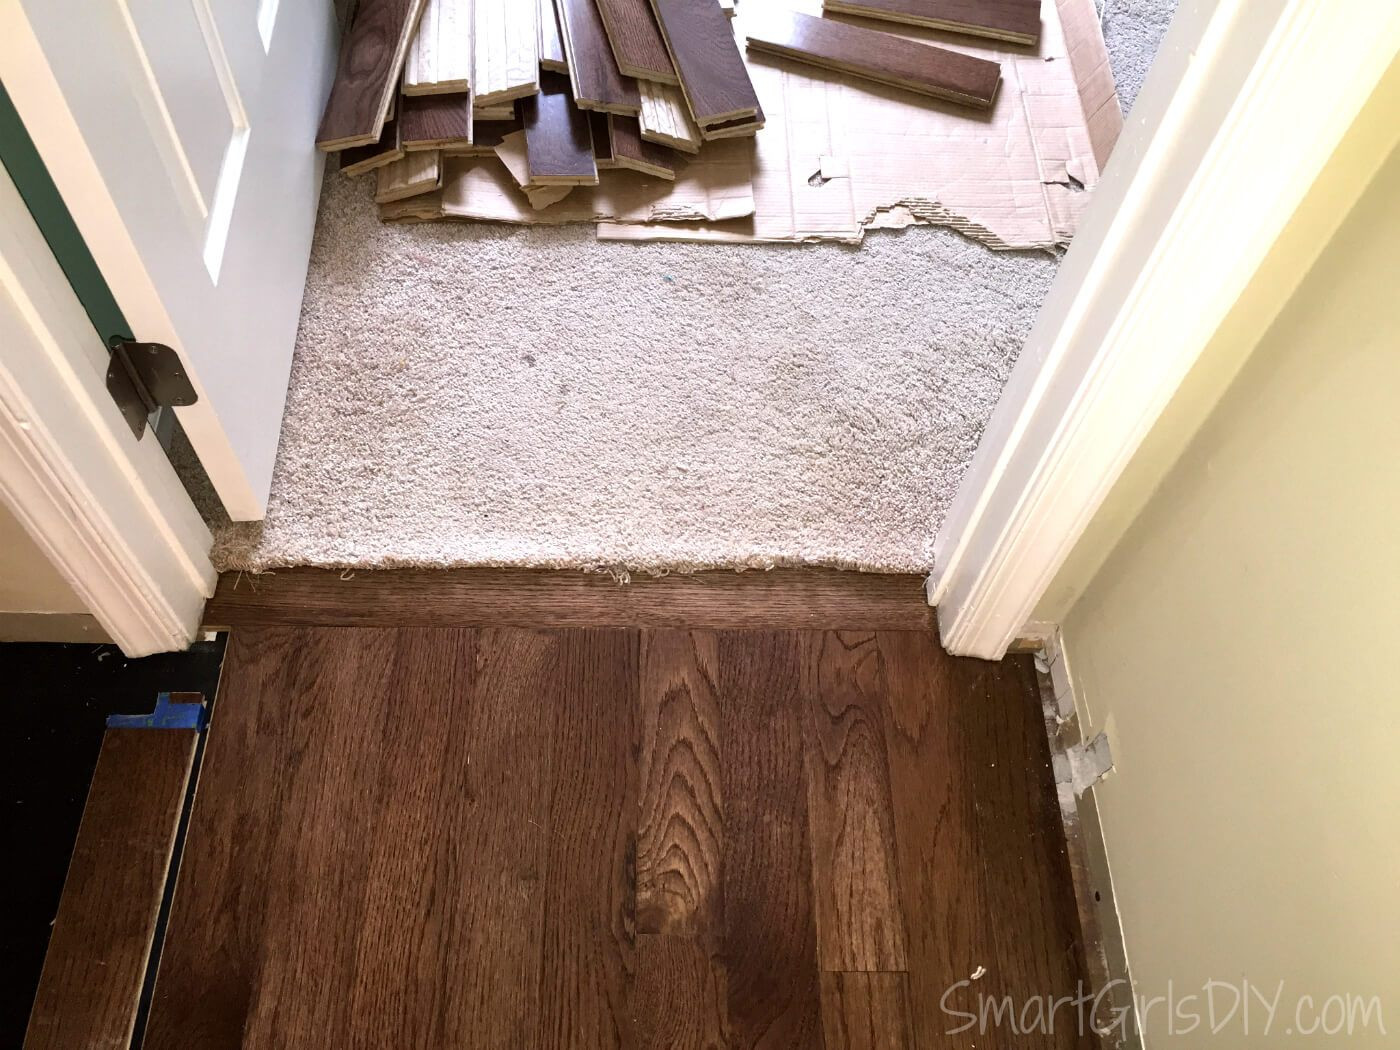 labor price to install hardwood floors of upstairs hallway 1 installing hardwood floors regarding transition between carpet and hardwood floor